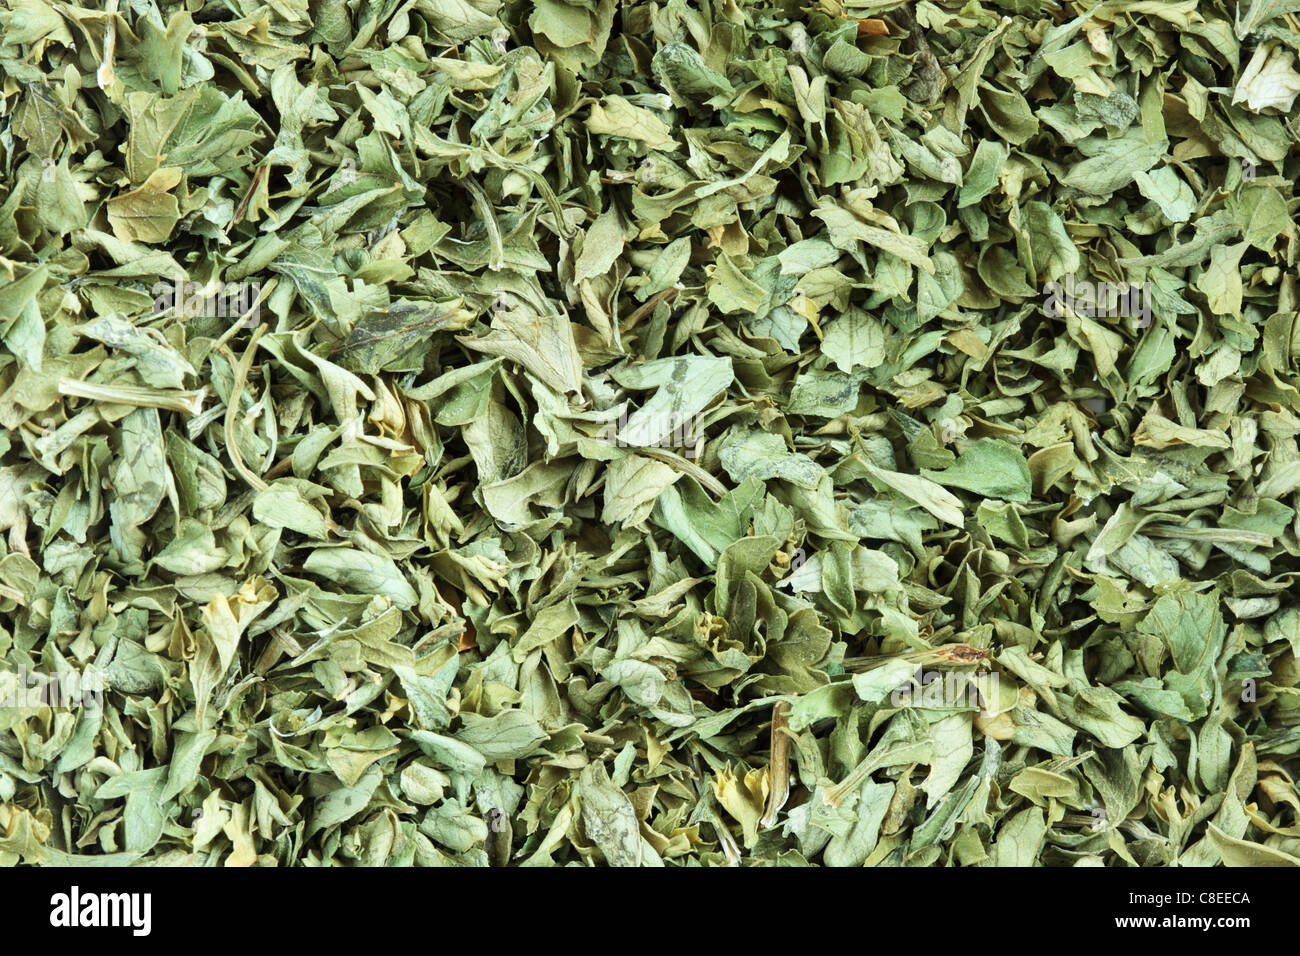 macro image of dried green parsley flakes Stock Photo